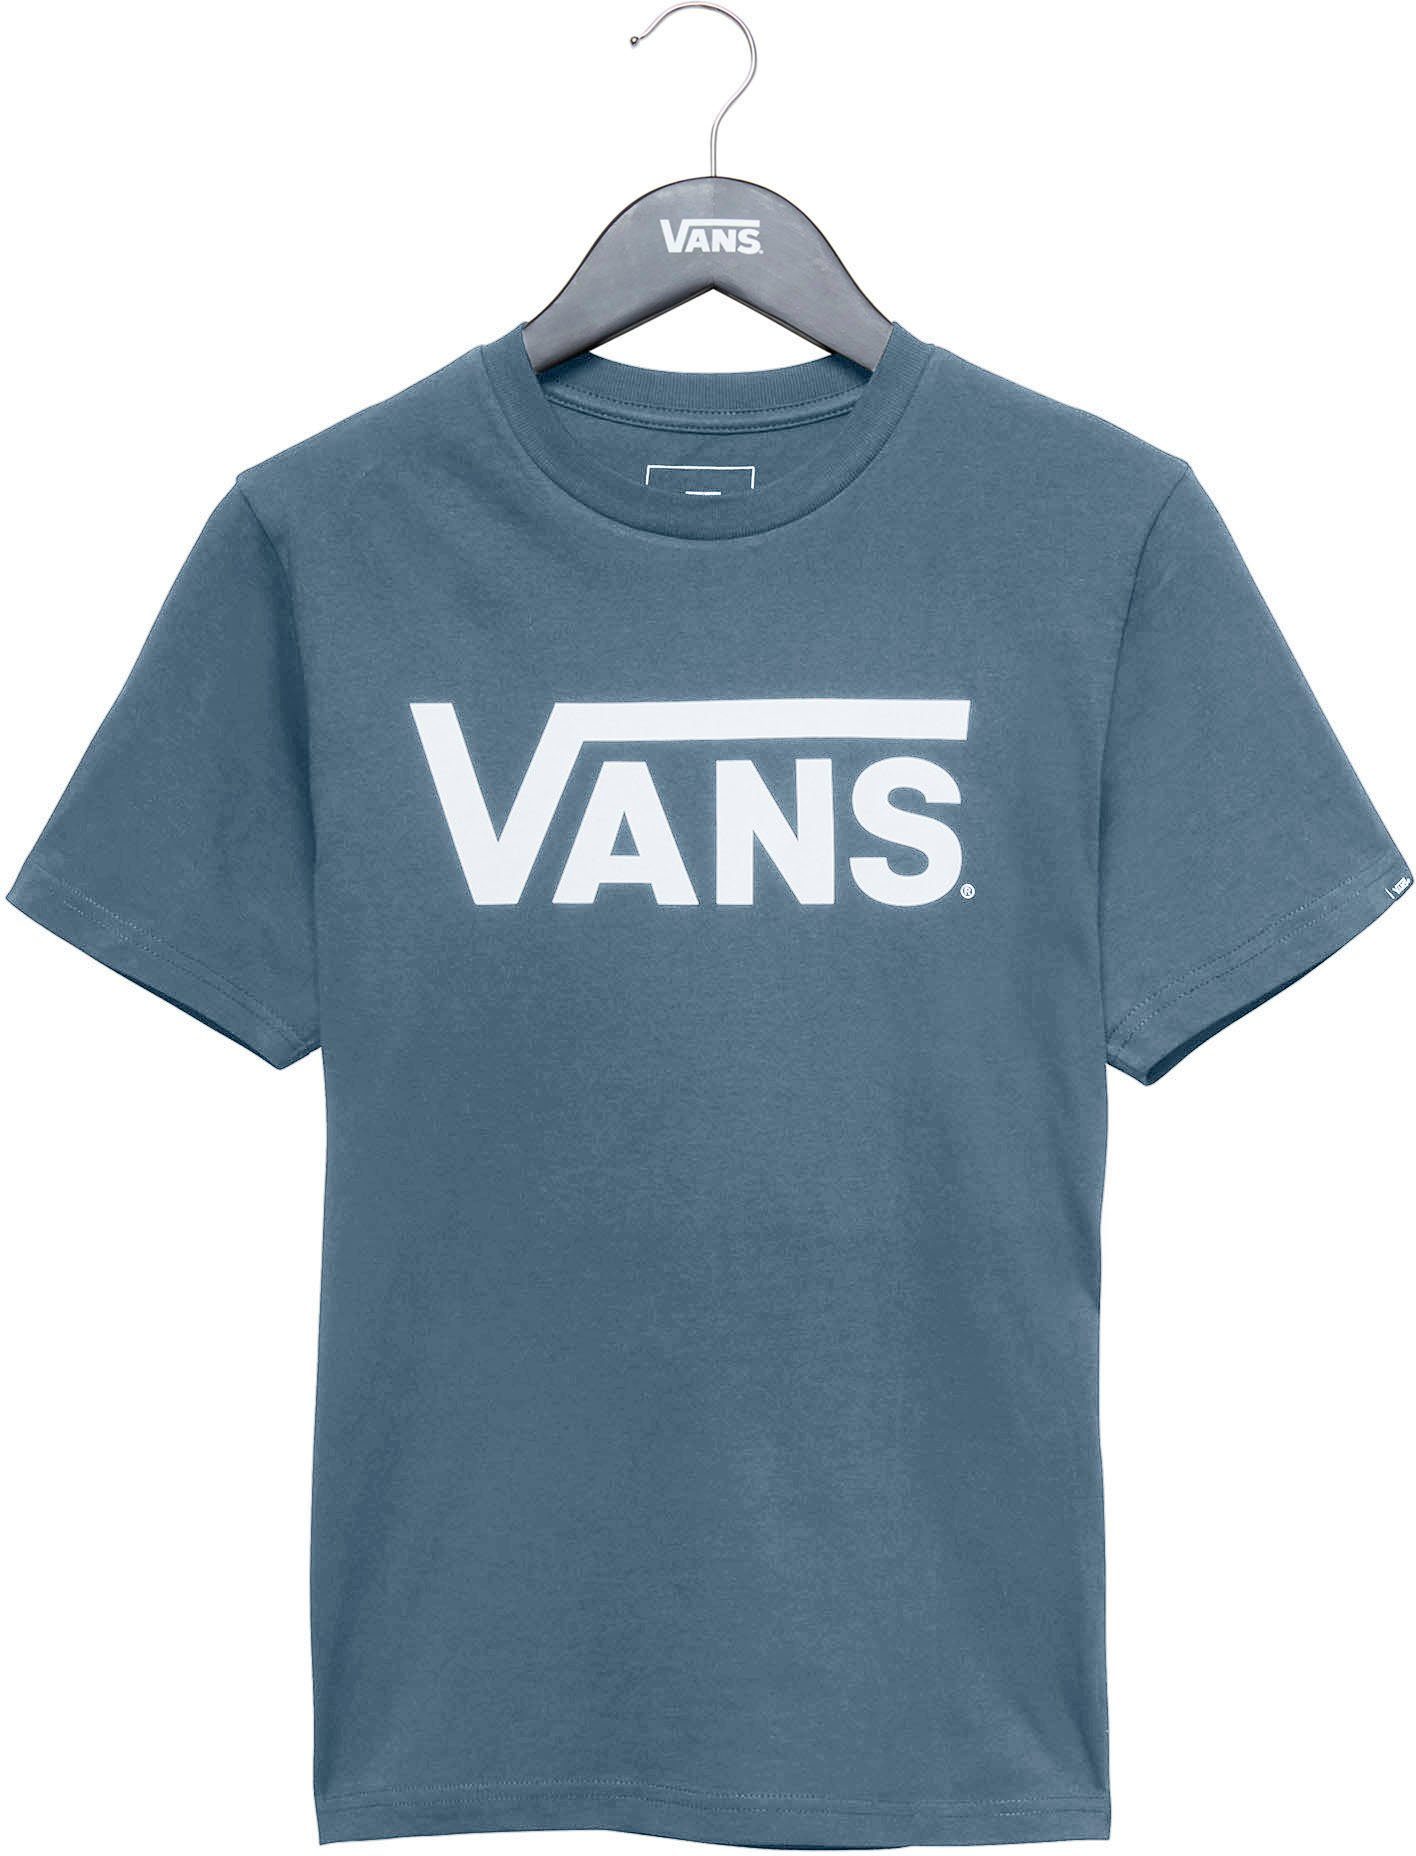 Vans BOYS CLASSIC VANS bluestone T-Shirt